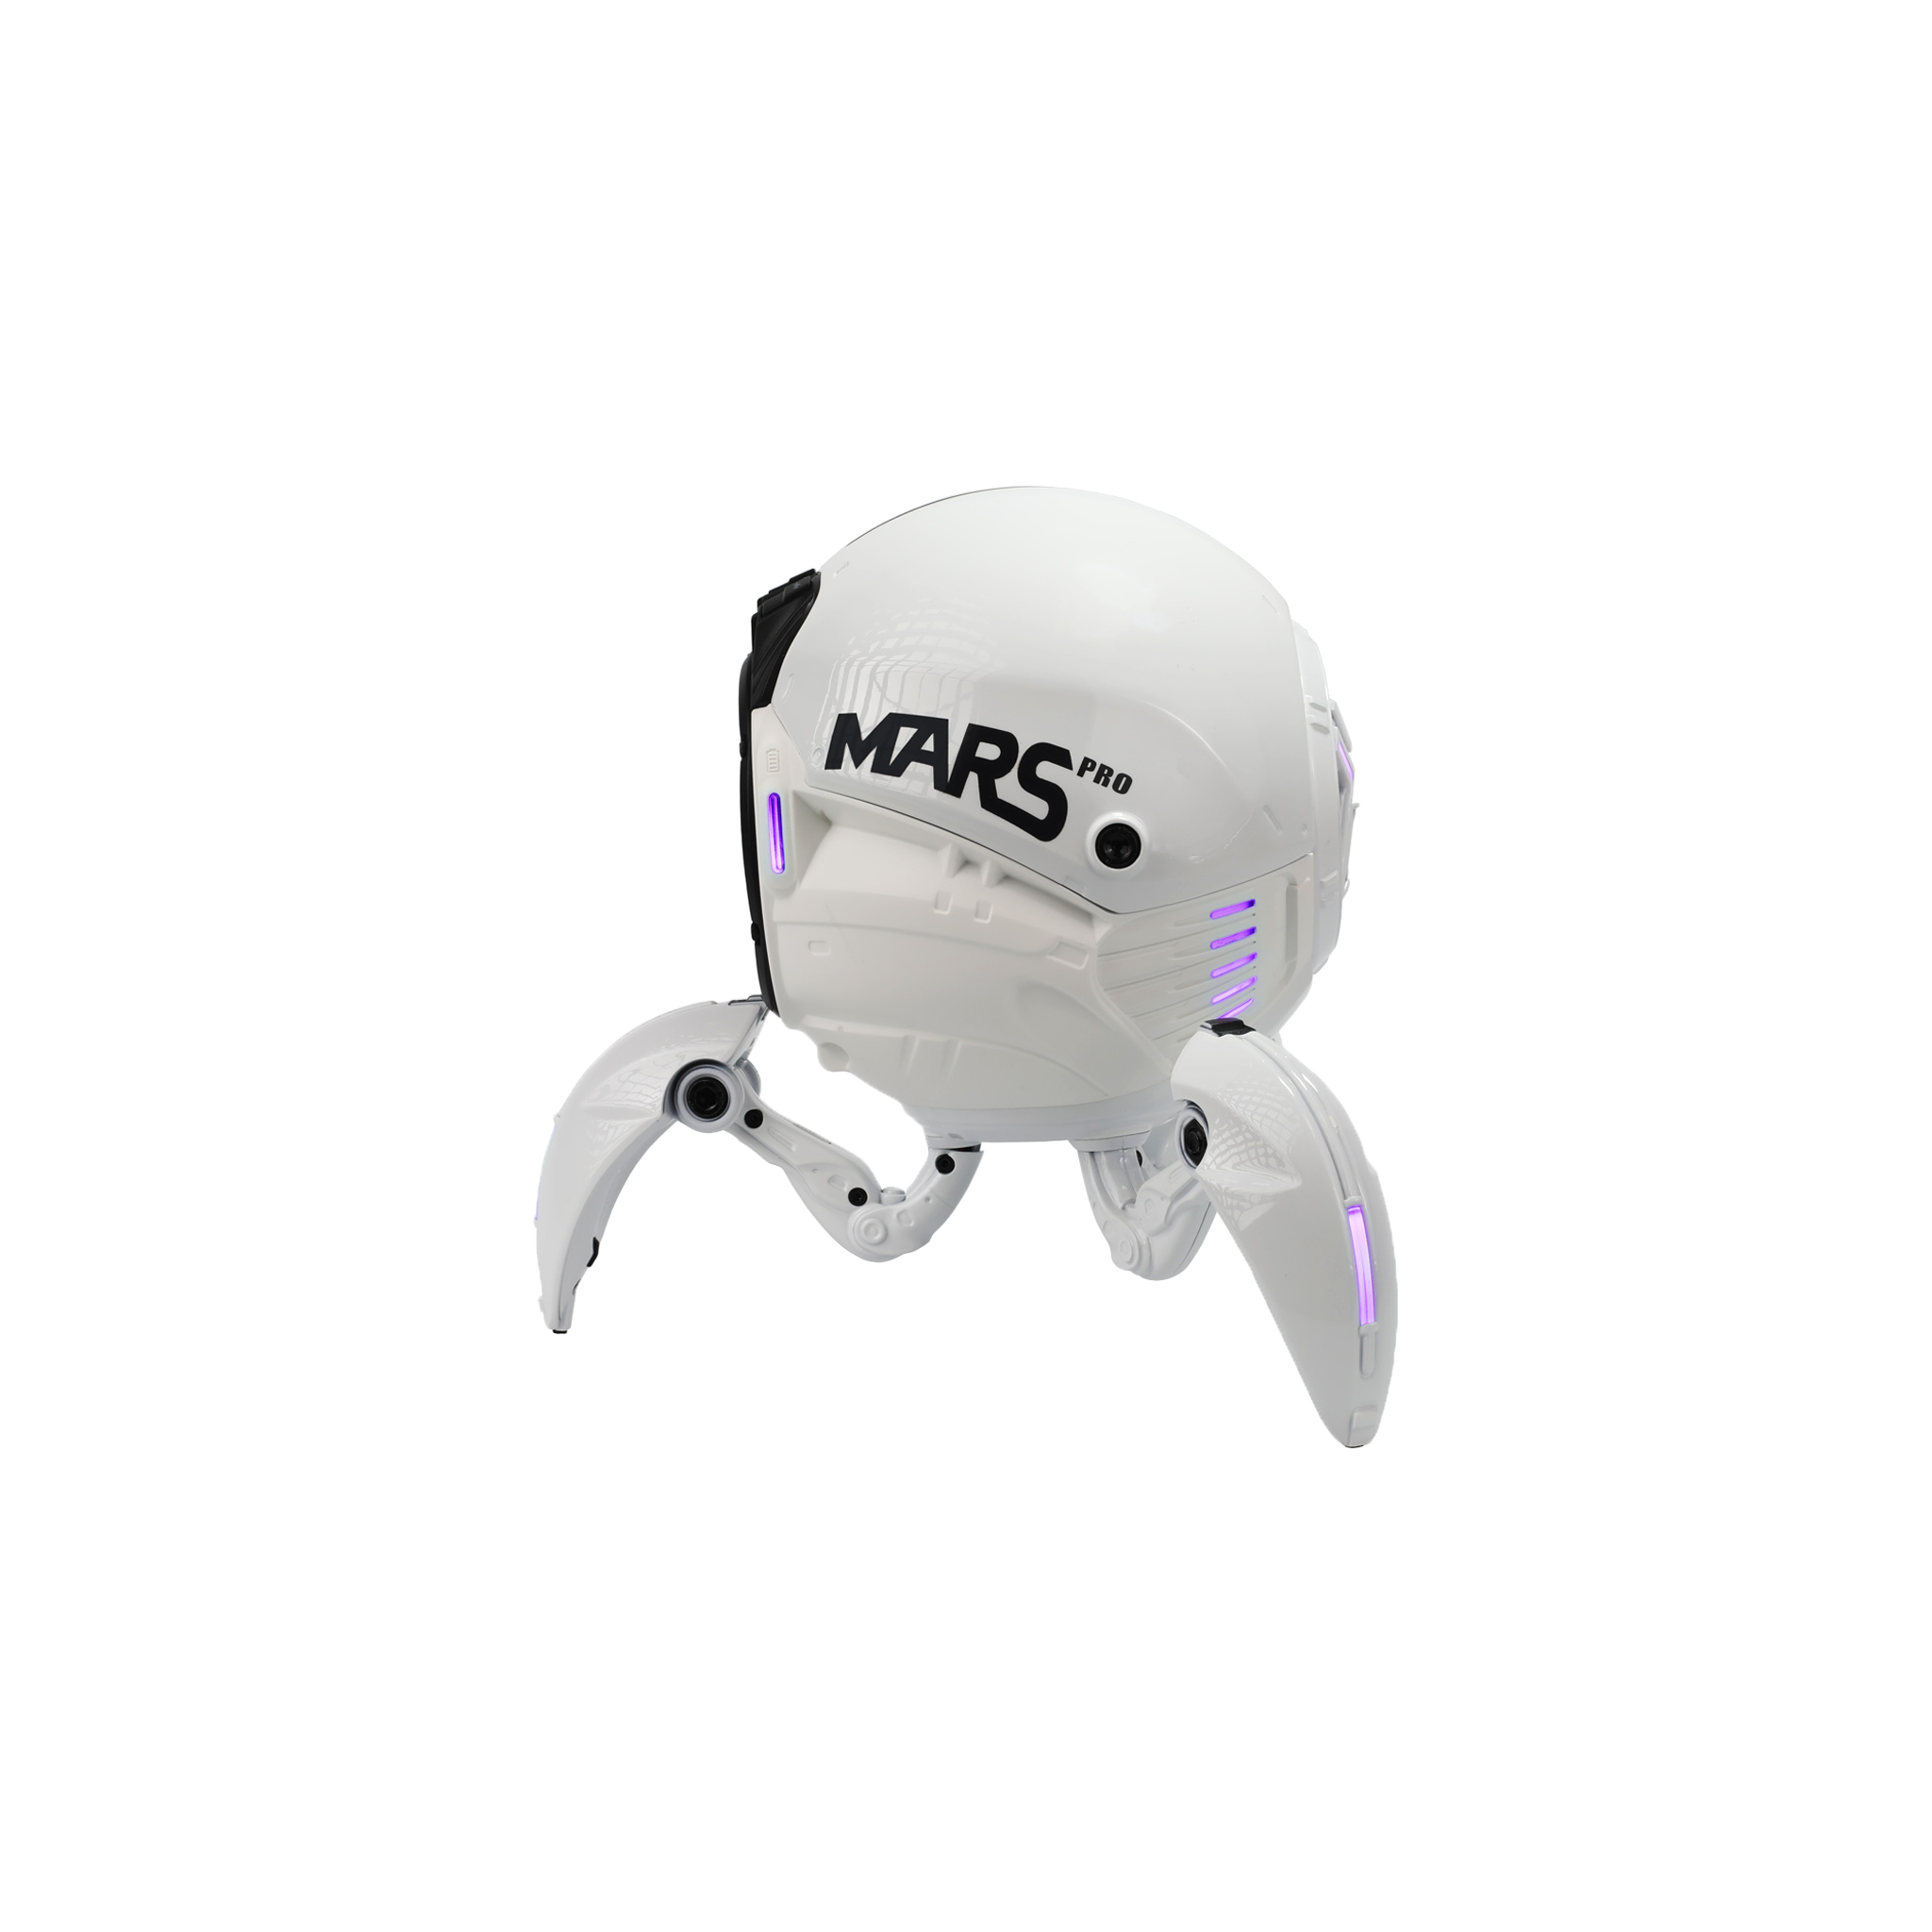 GravaStar Mars Pro Bluetooth Speaker (White)